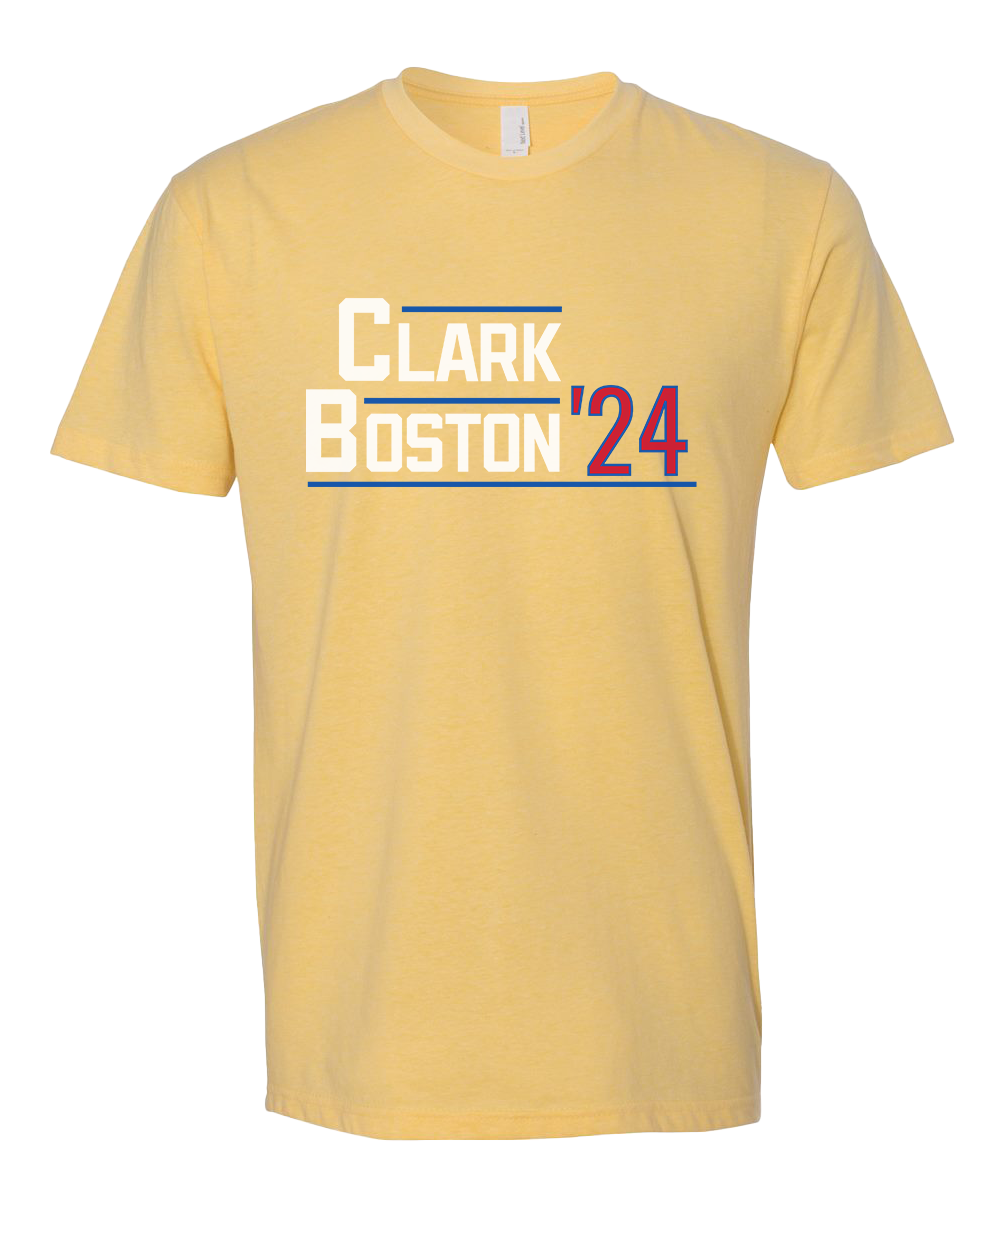 Clark Boston '24 Indiana Basketball Tshirt - Various Colors